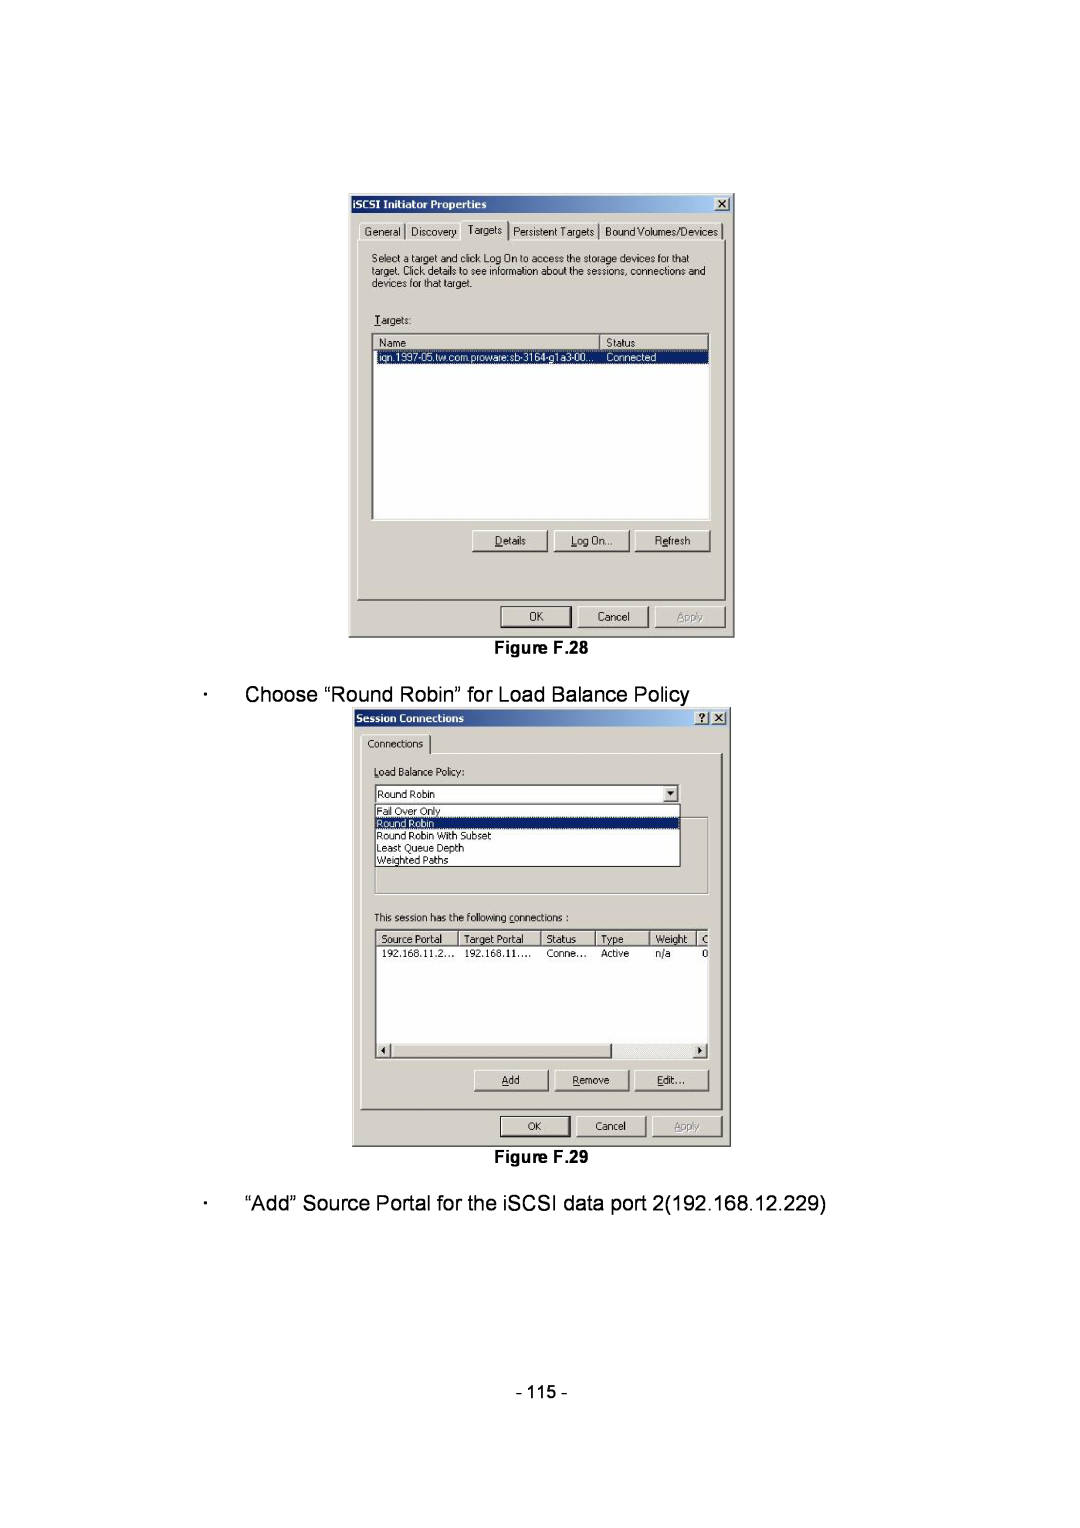 APC SCSI-SATA II manual ž Choose “Round Robin” for Load Balance Policy, ž “Add” Source Portal for the iSCSI data port 